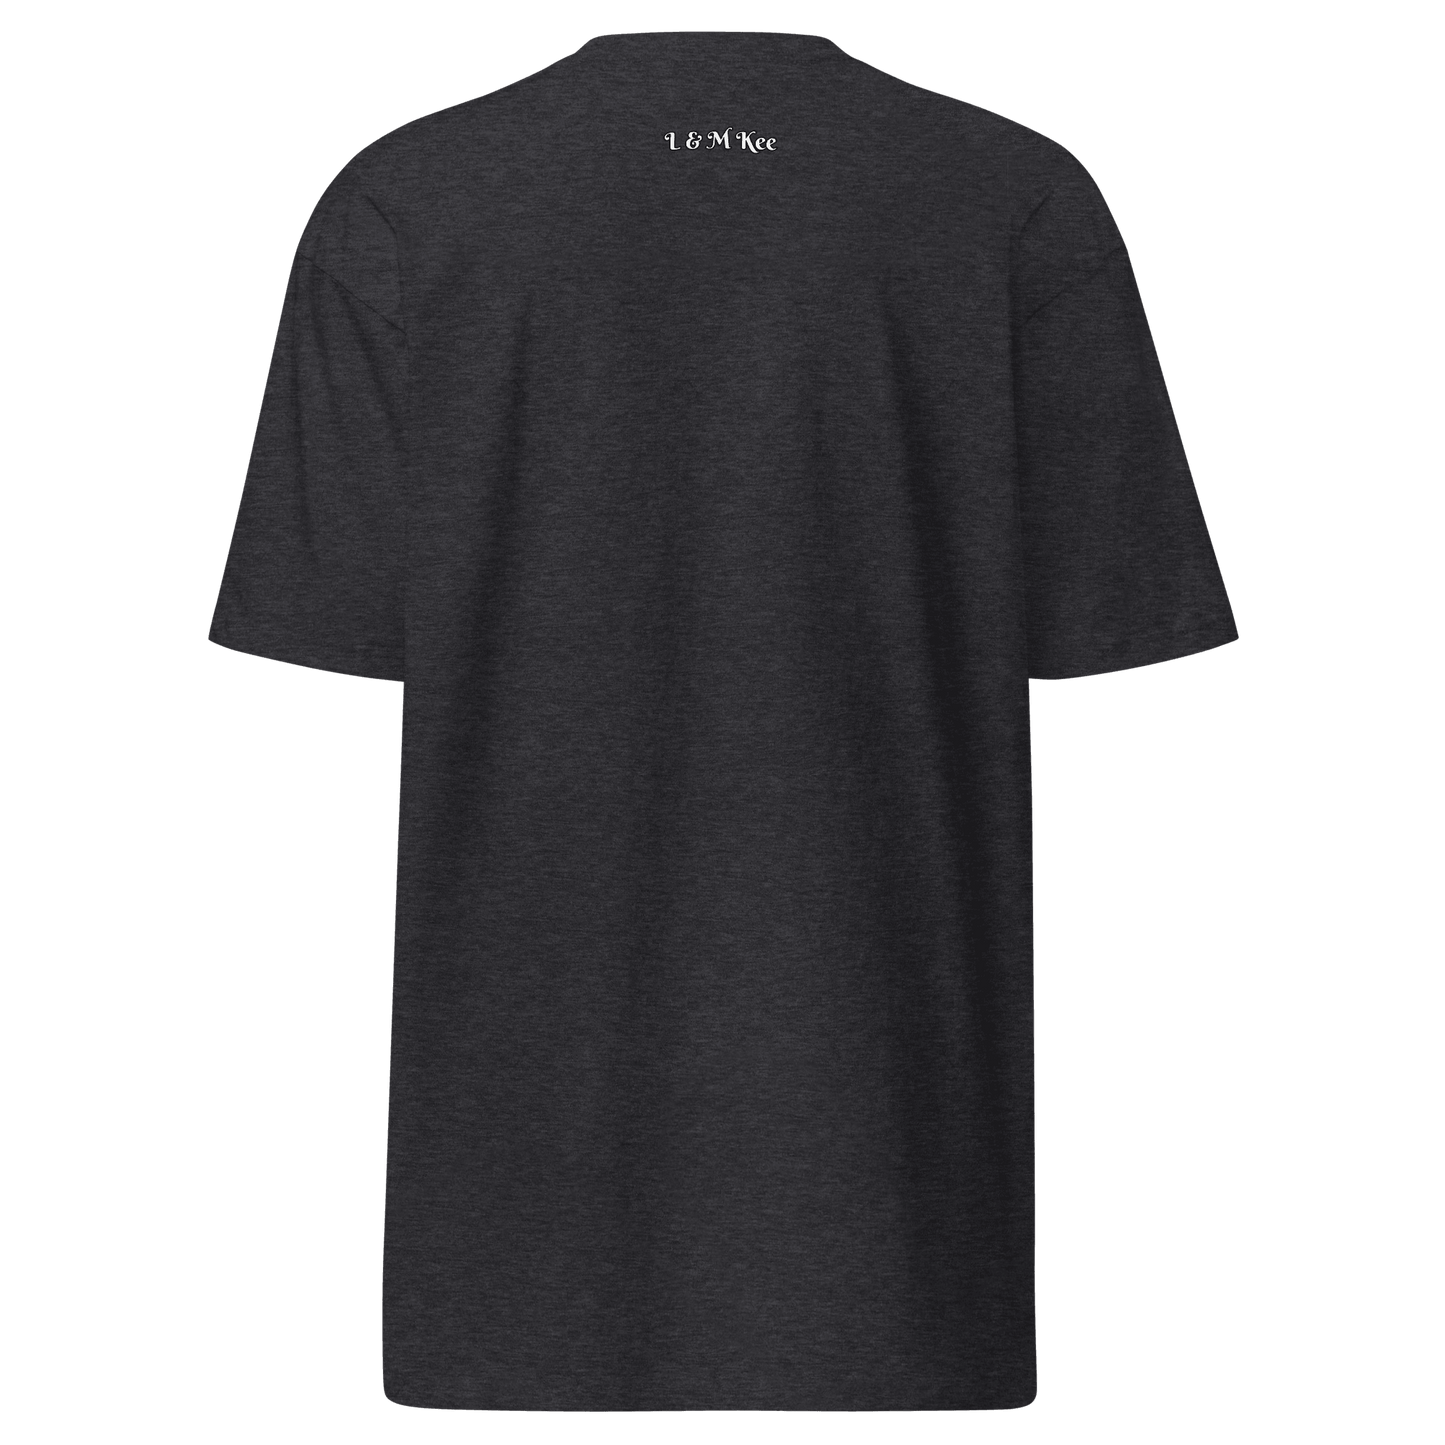 Farm Fresh T-Shirt - L & M Kee, LLC